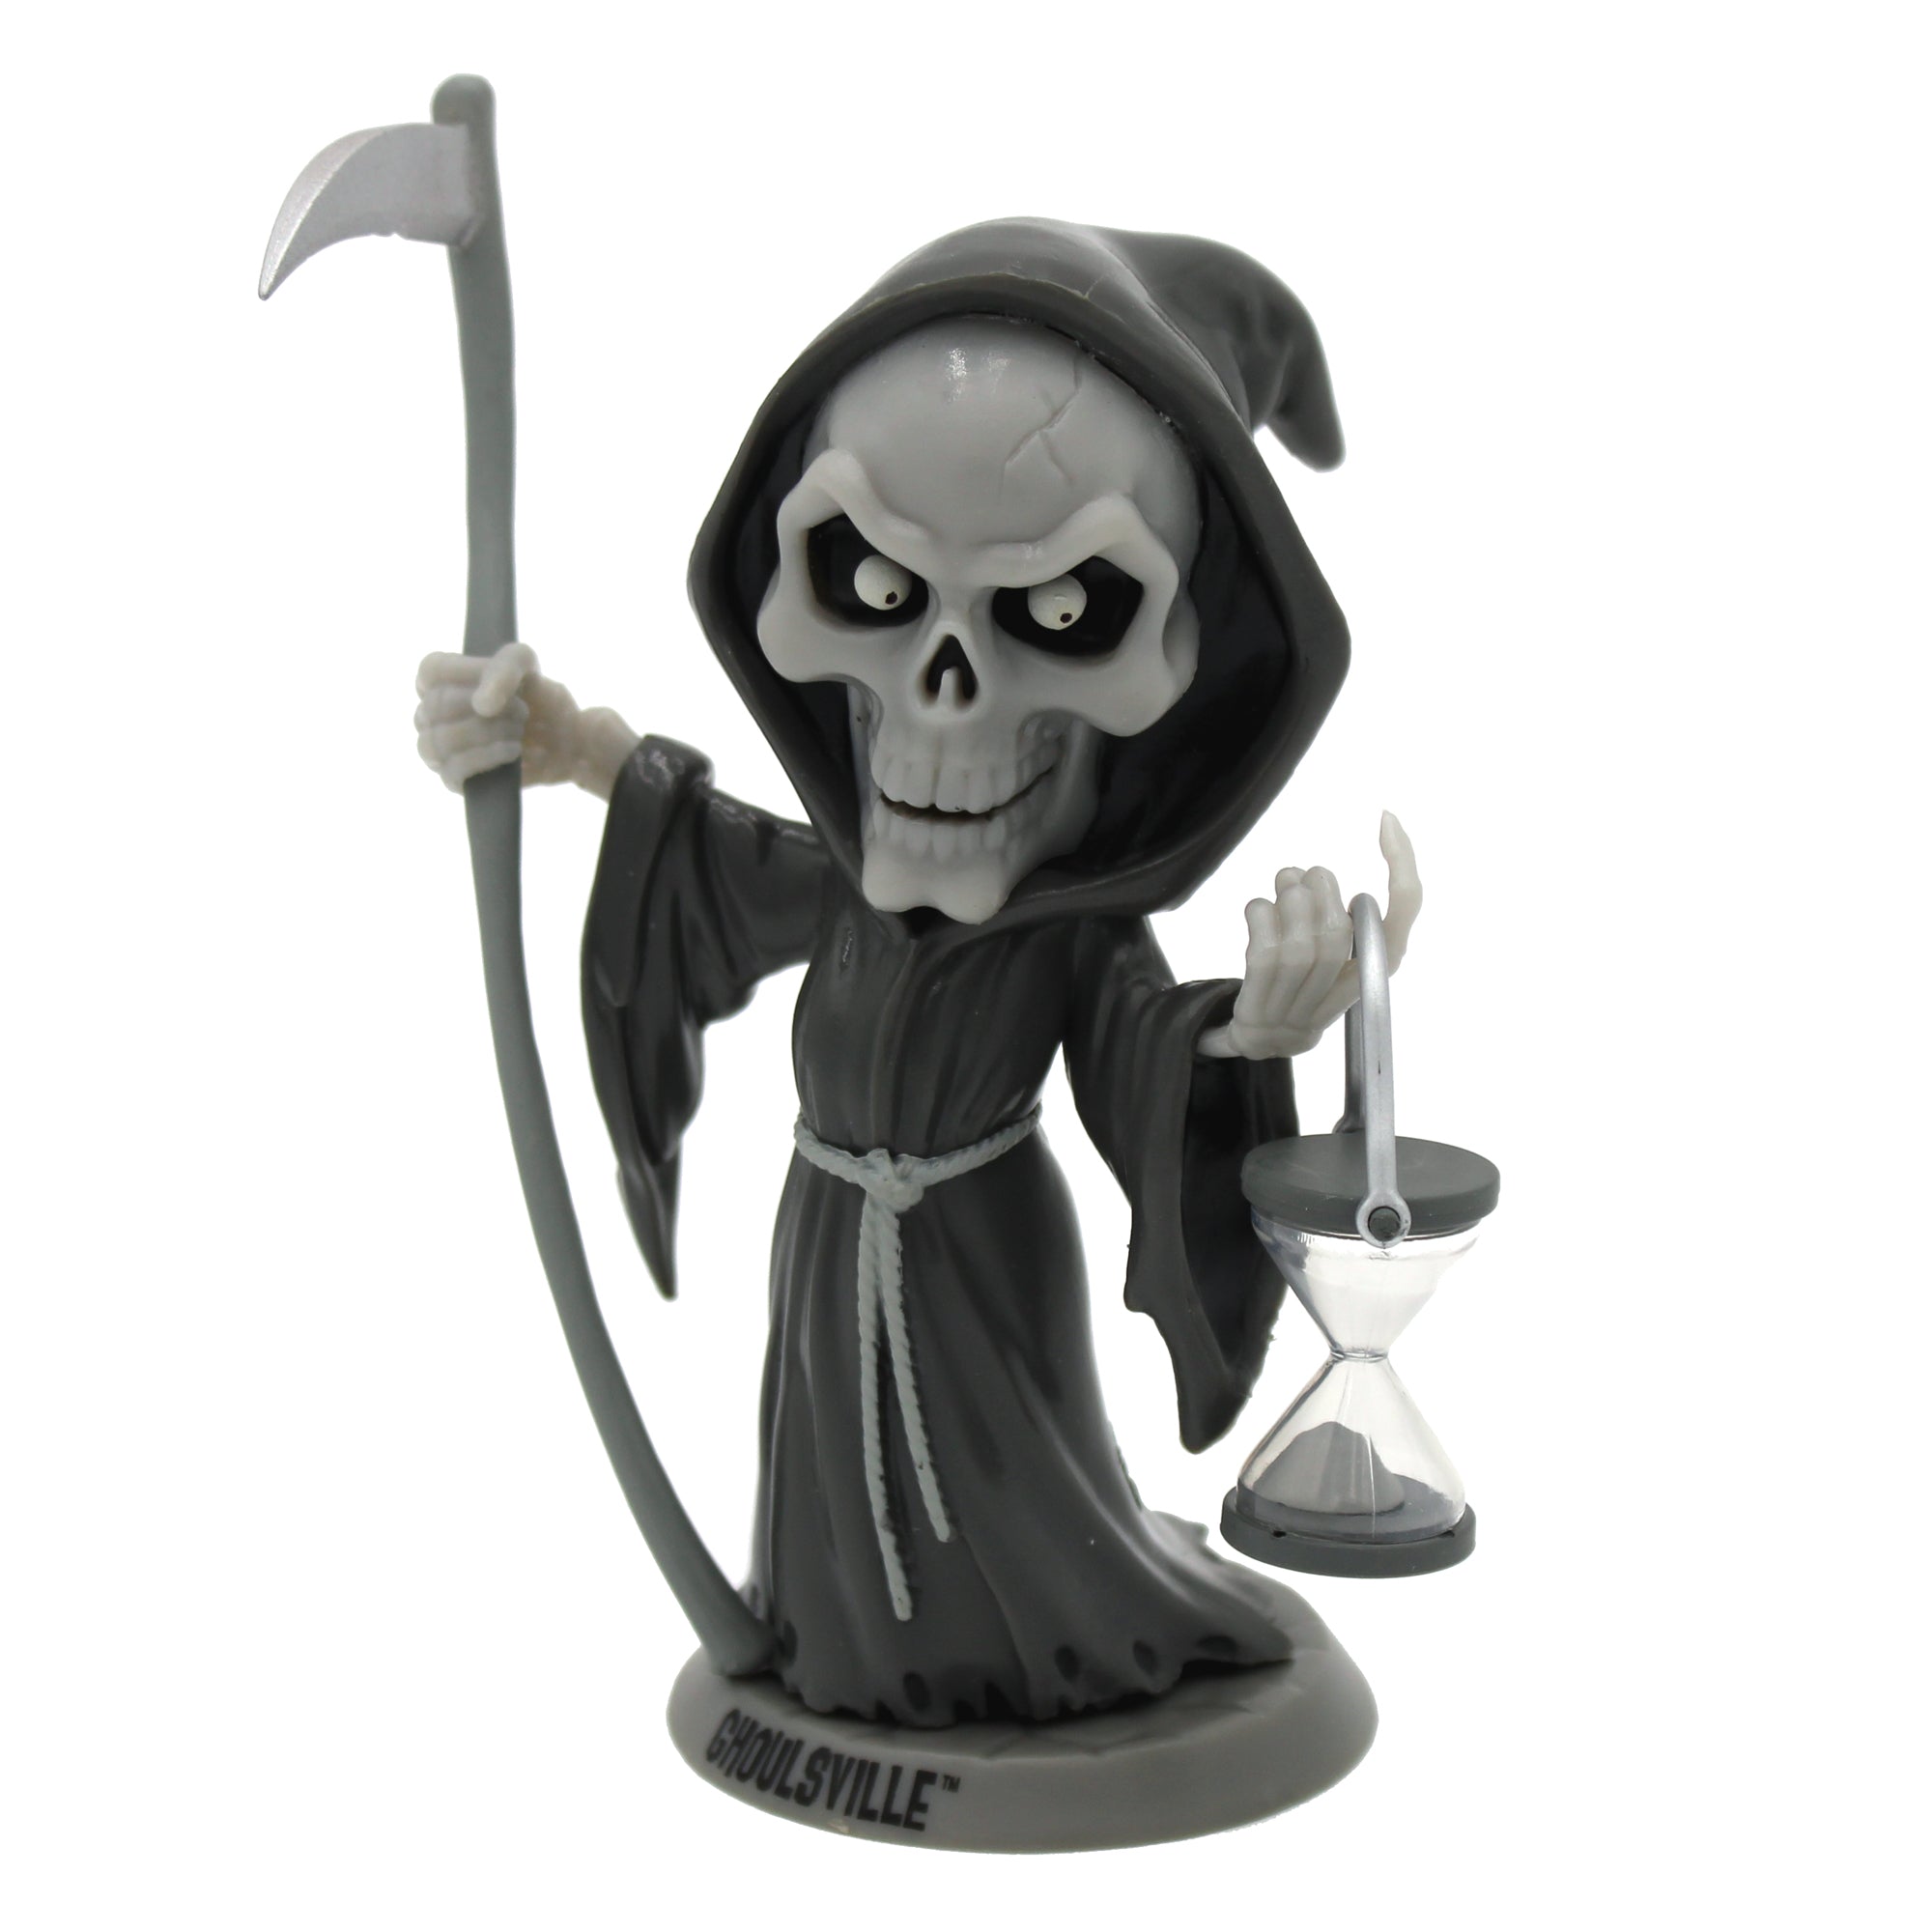 Tiny Terrors Grimm the Reaper Black & White Horror Figure